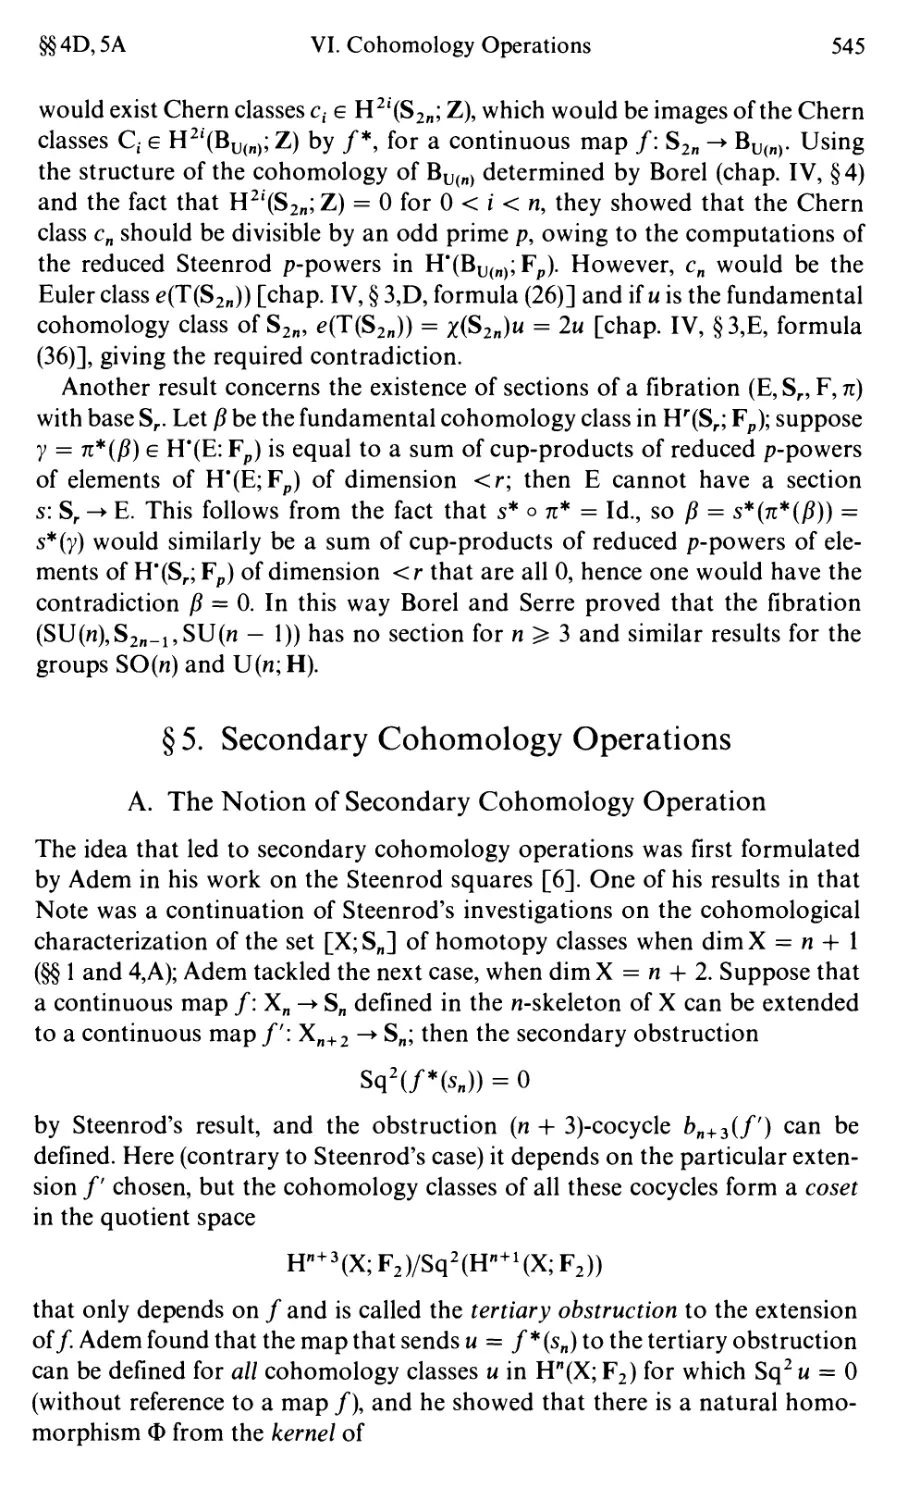 §5. Secondary Cohomology Operations